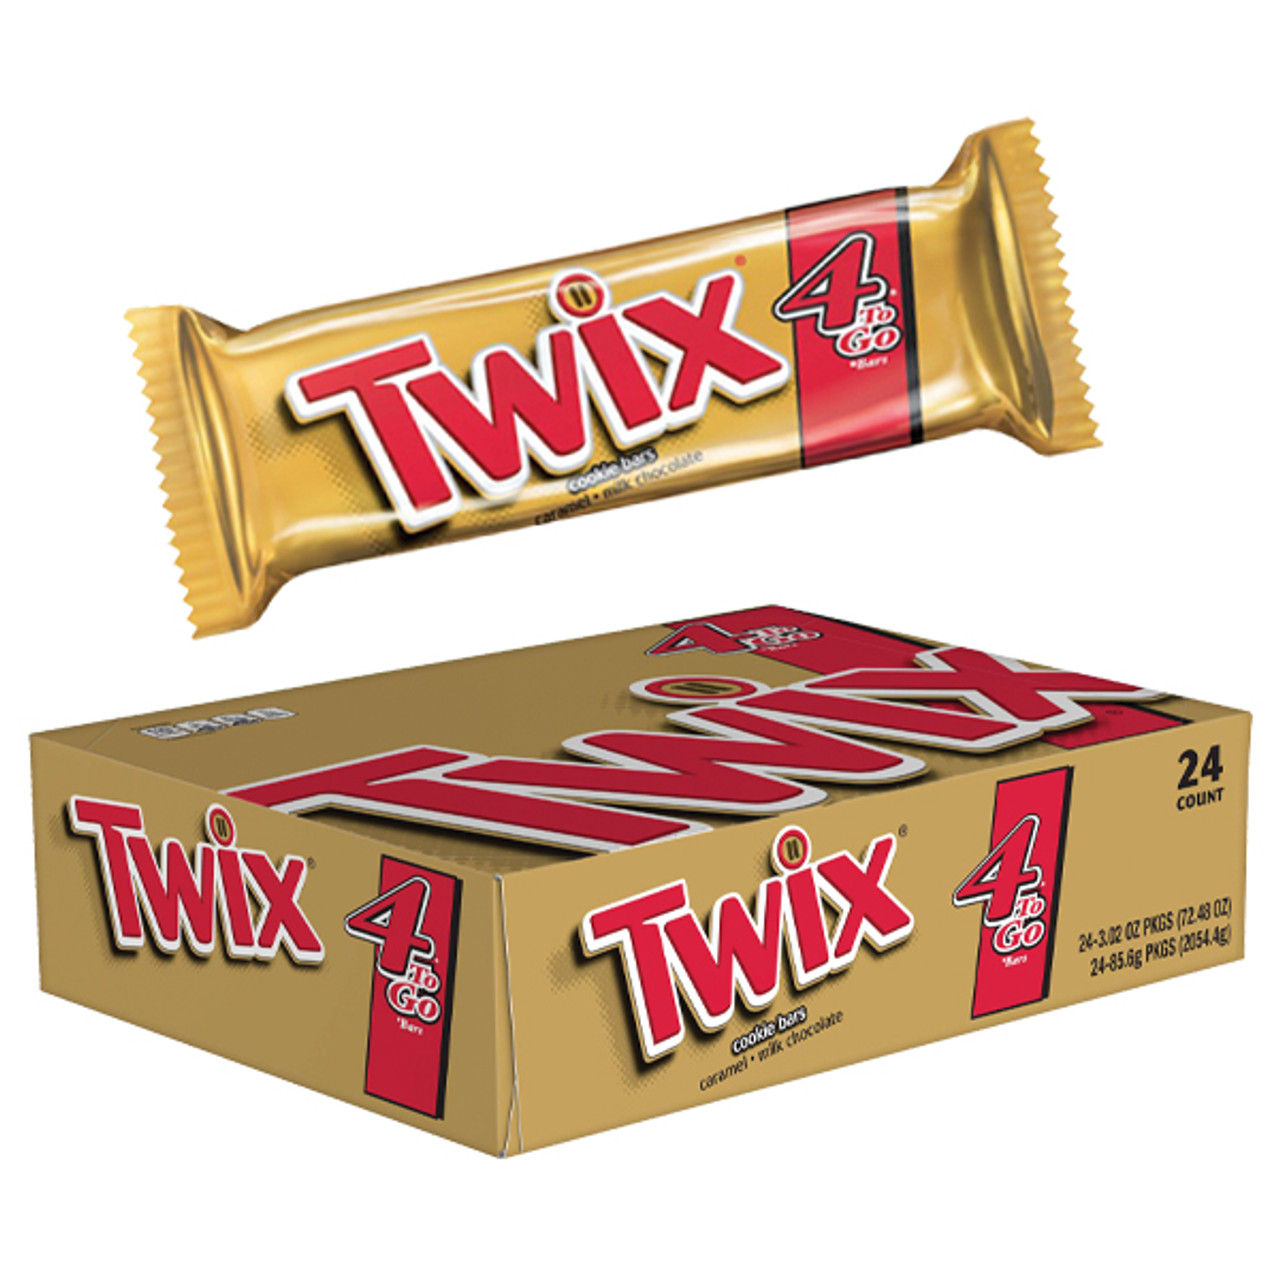 Twix Full Size Caramel Chocolate Cookie Candy Bar, 1.79 oz - Pick